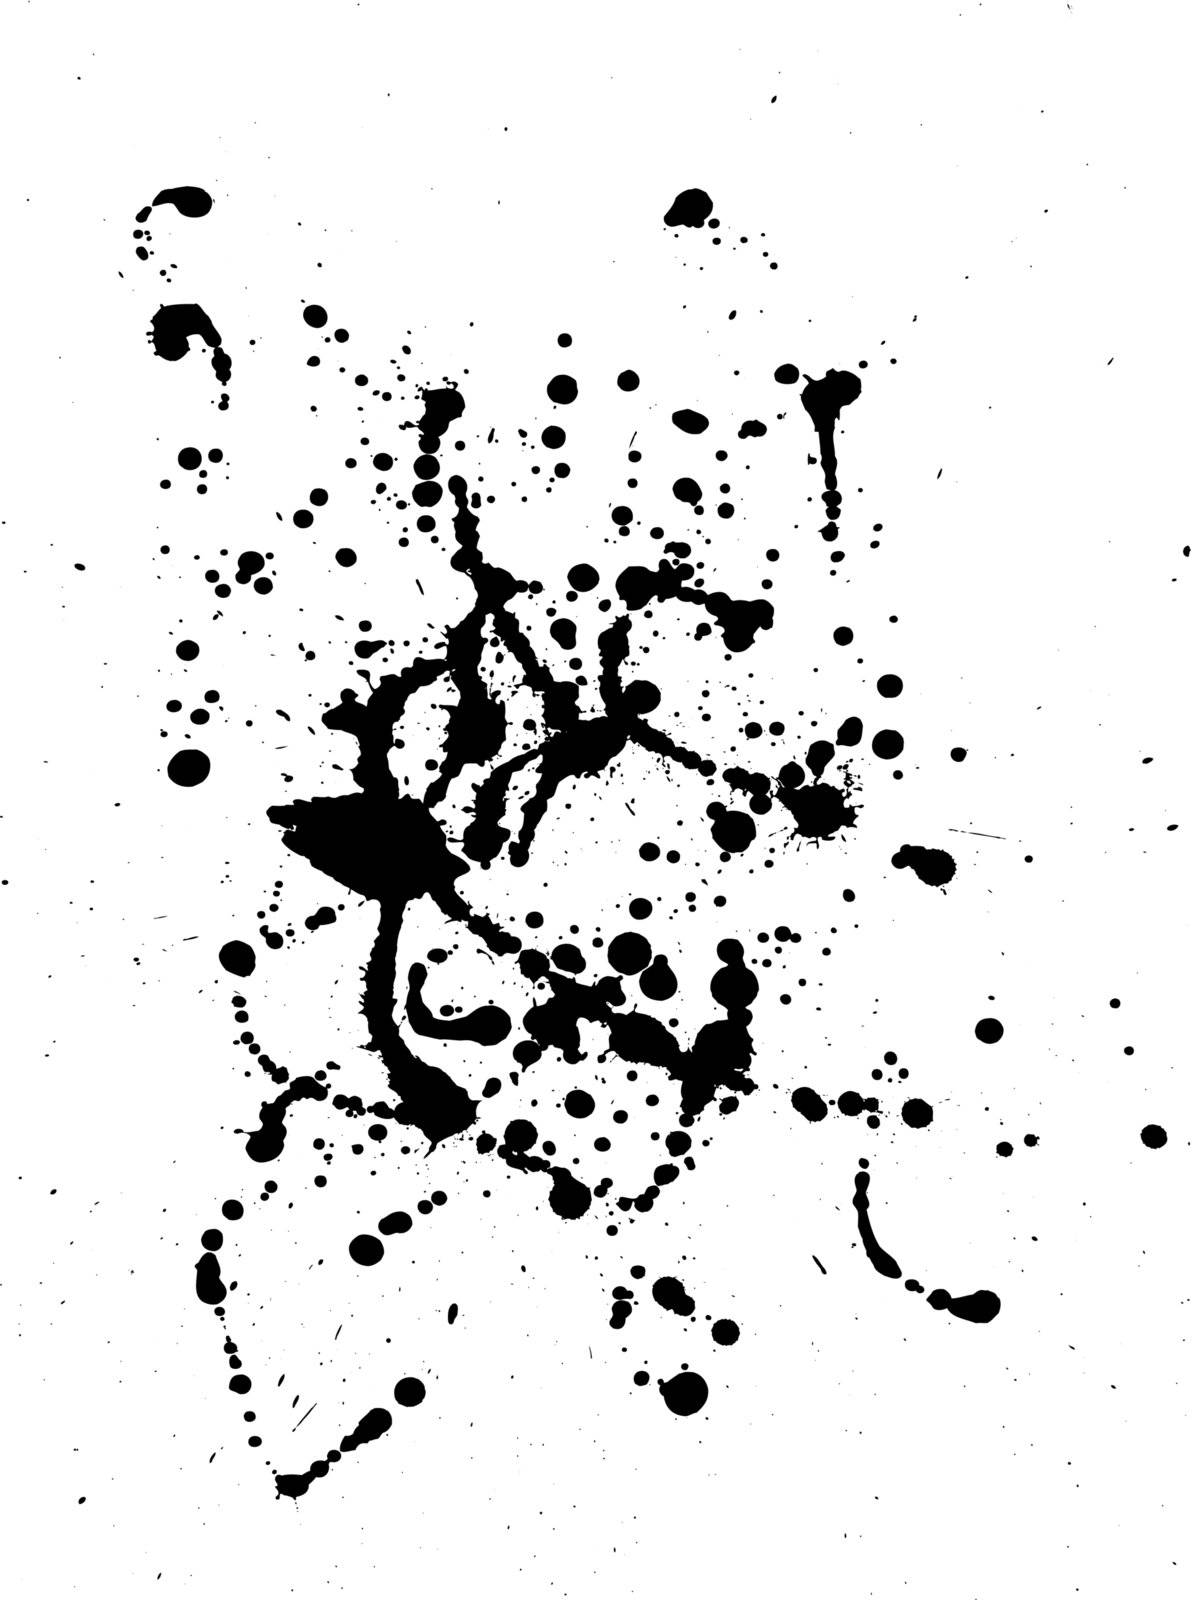 black ink splash over white background